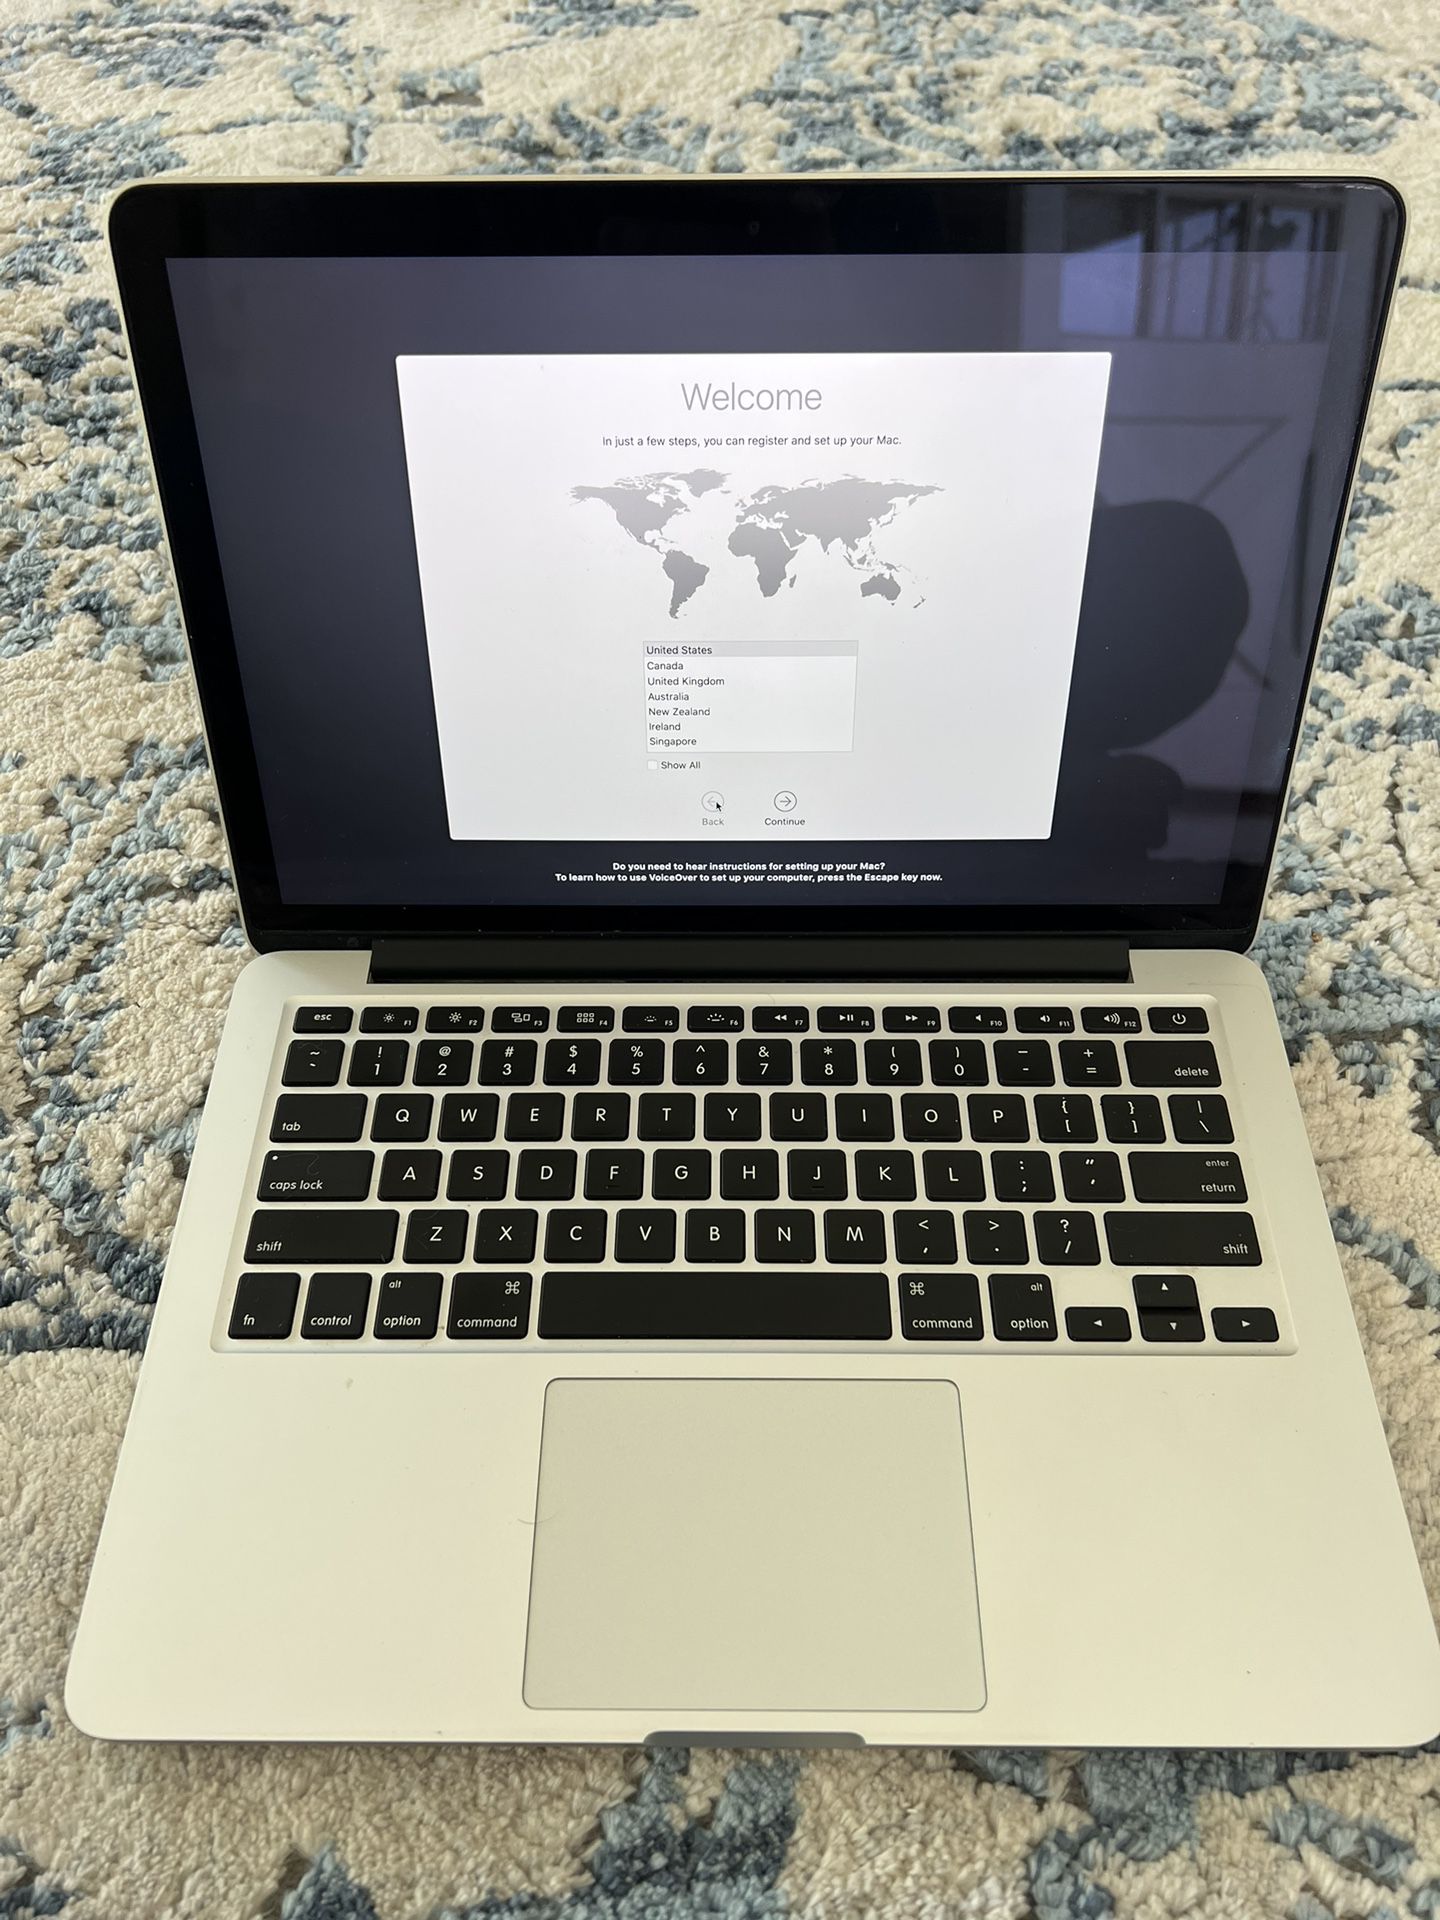 MacBook Pro (Retina, 13-inch) 2.4 GHz Intel Core i5